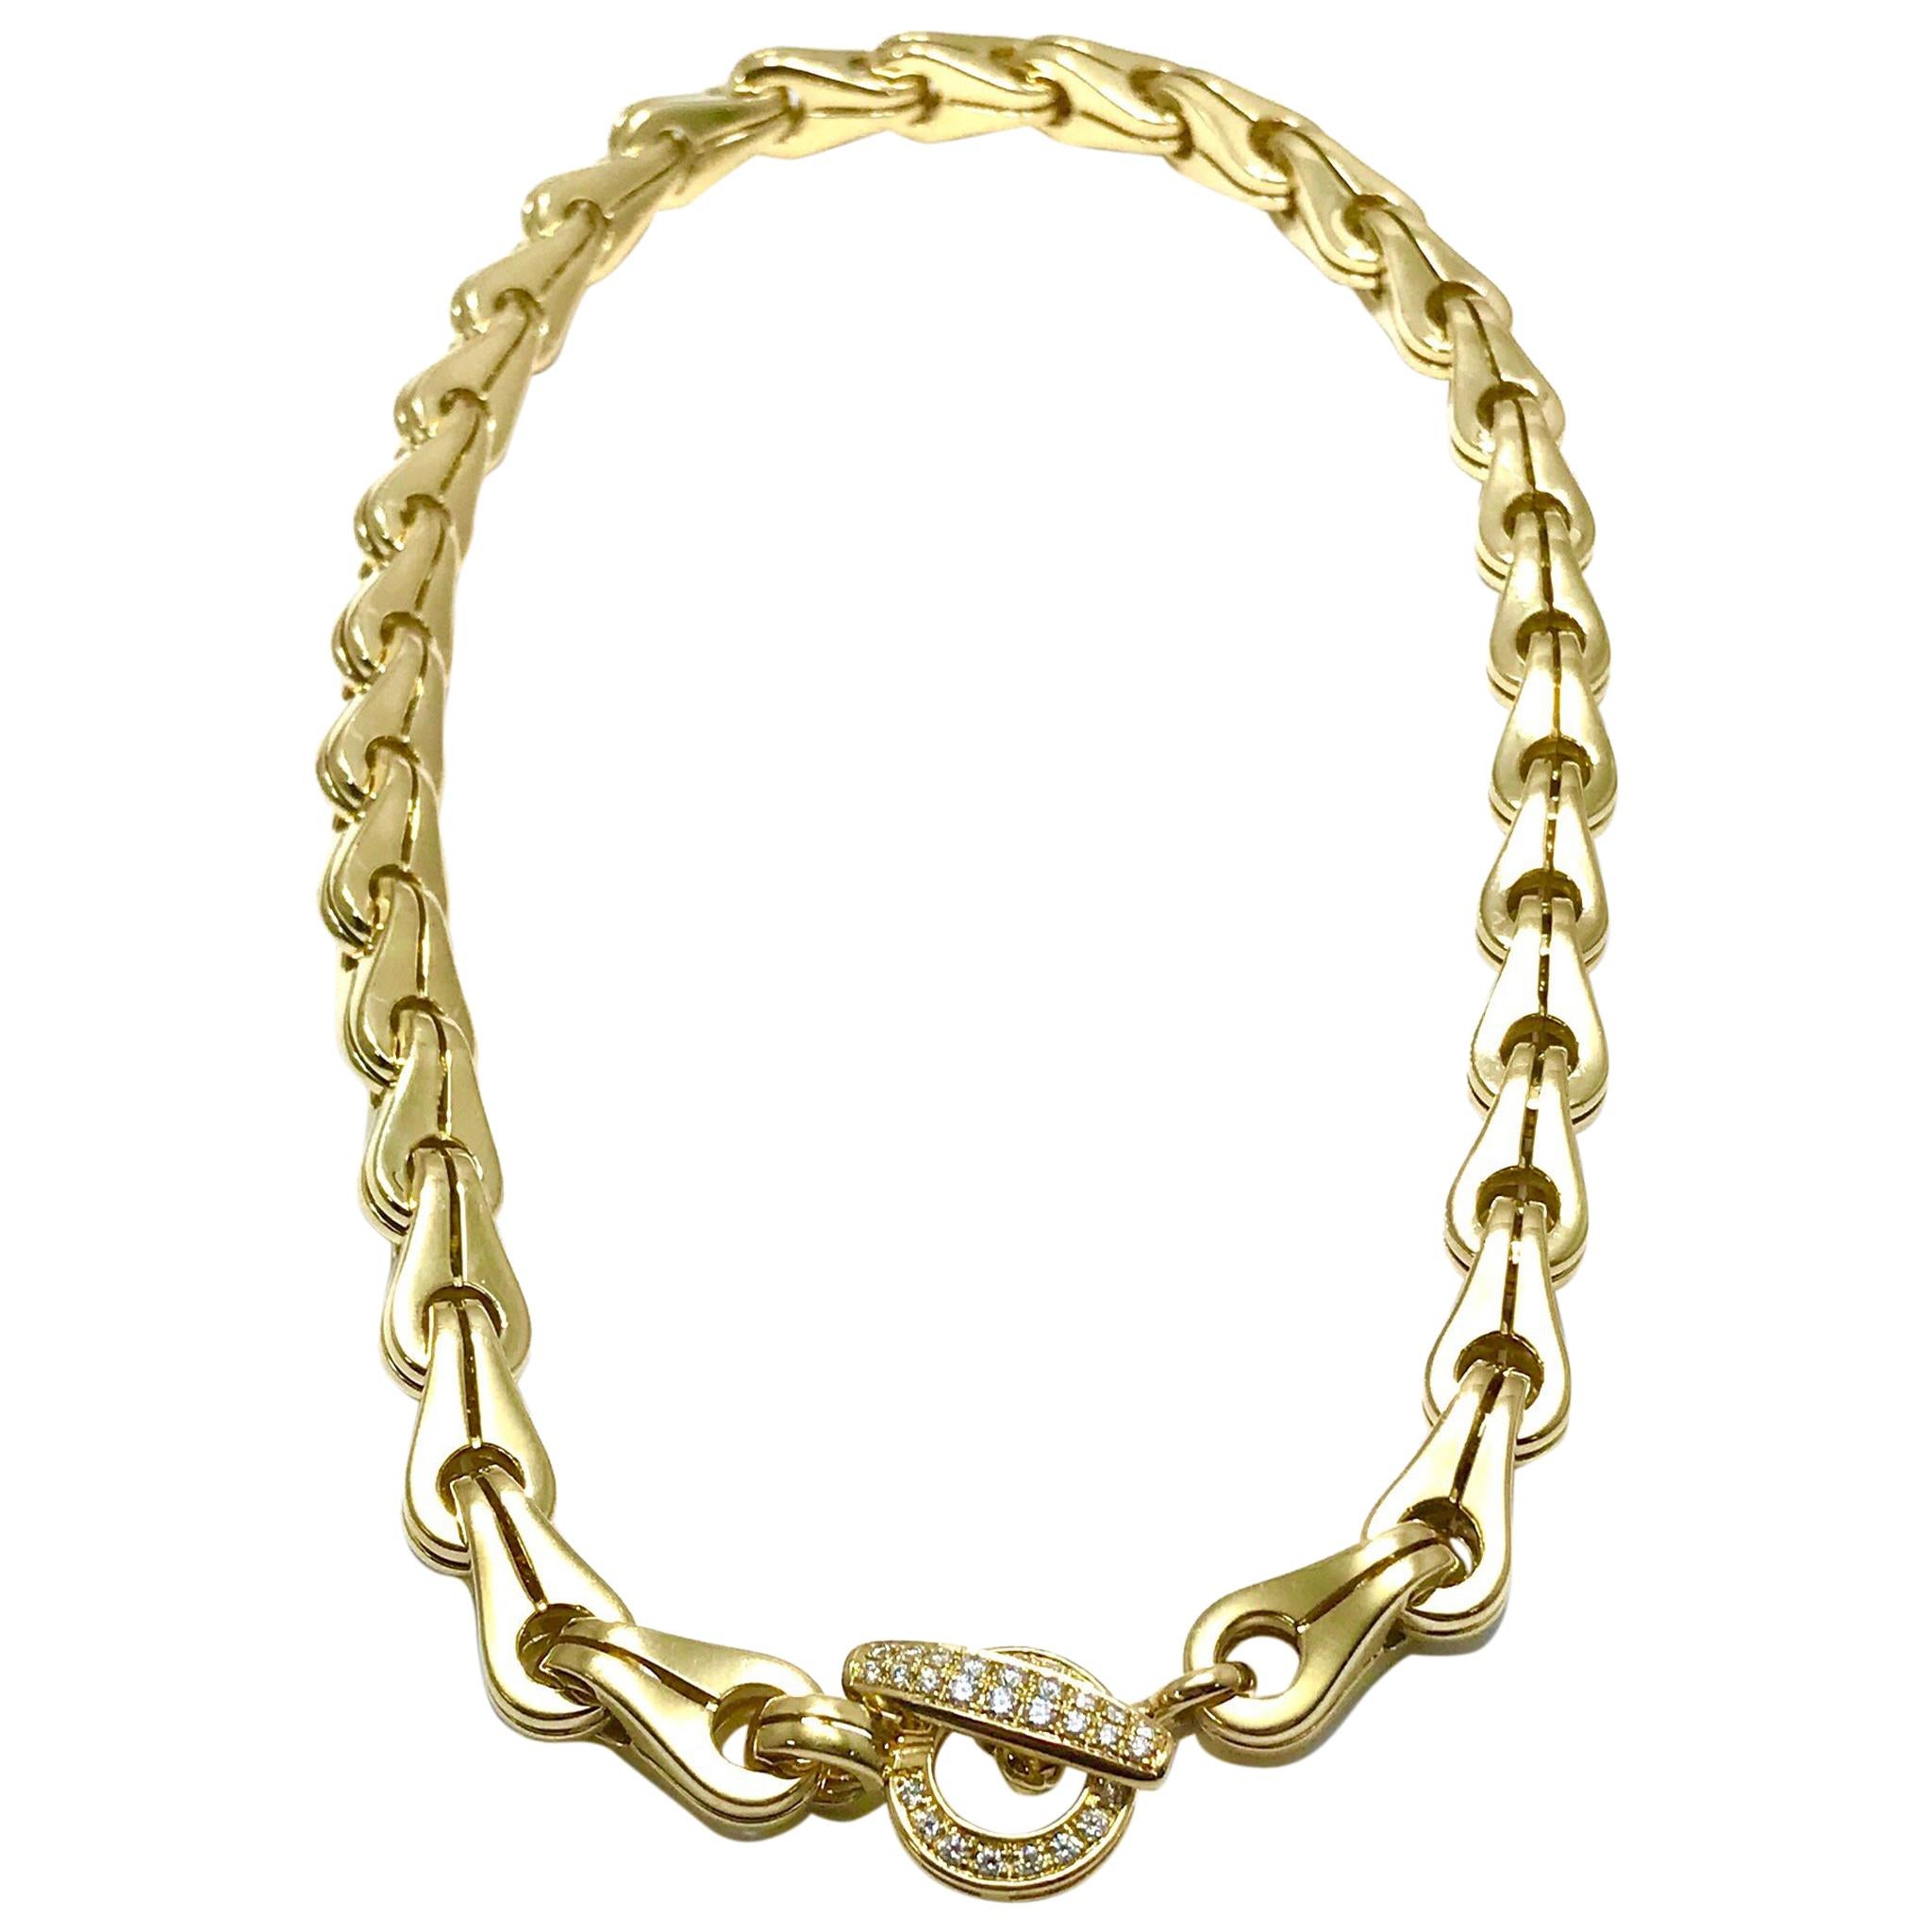 Di Modolo Tempia 0.52 Carat Diamond and 18 Karat Yellow Gold Collar Necklace